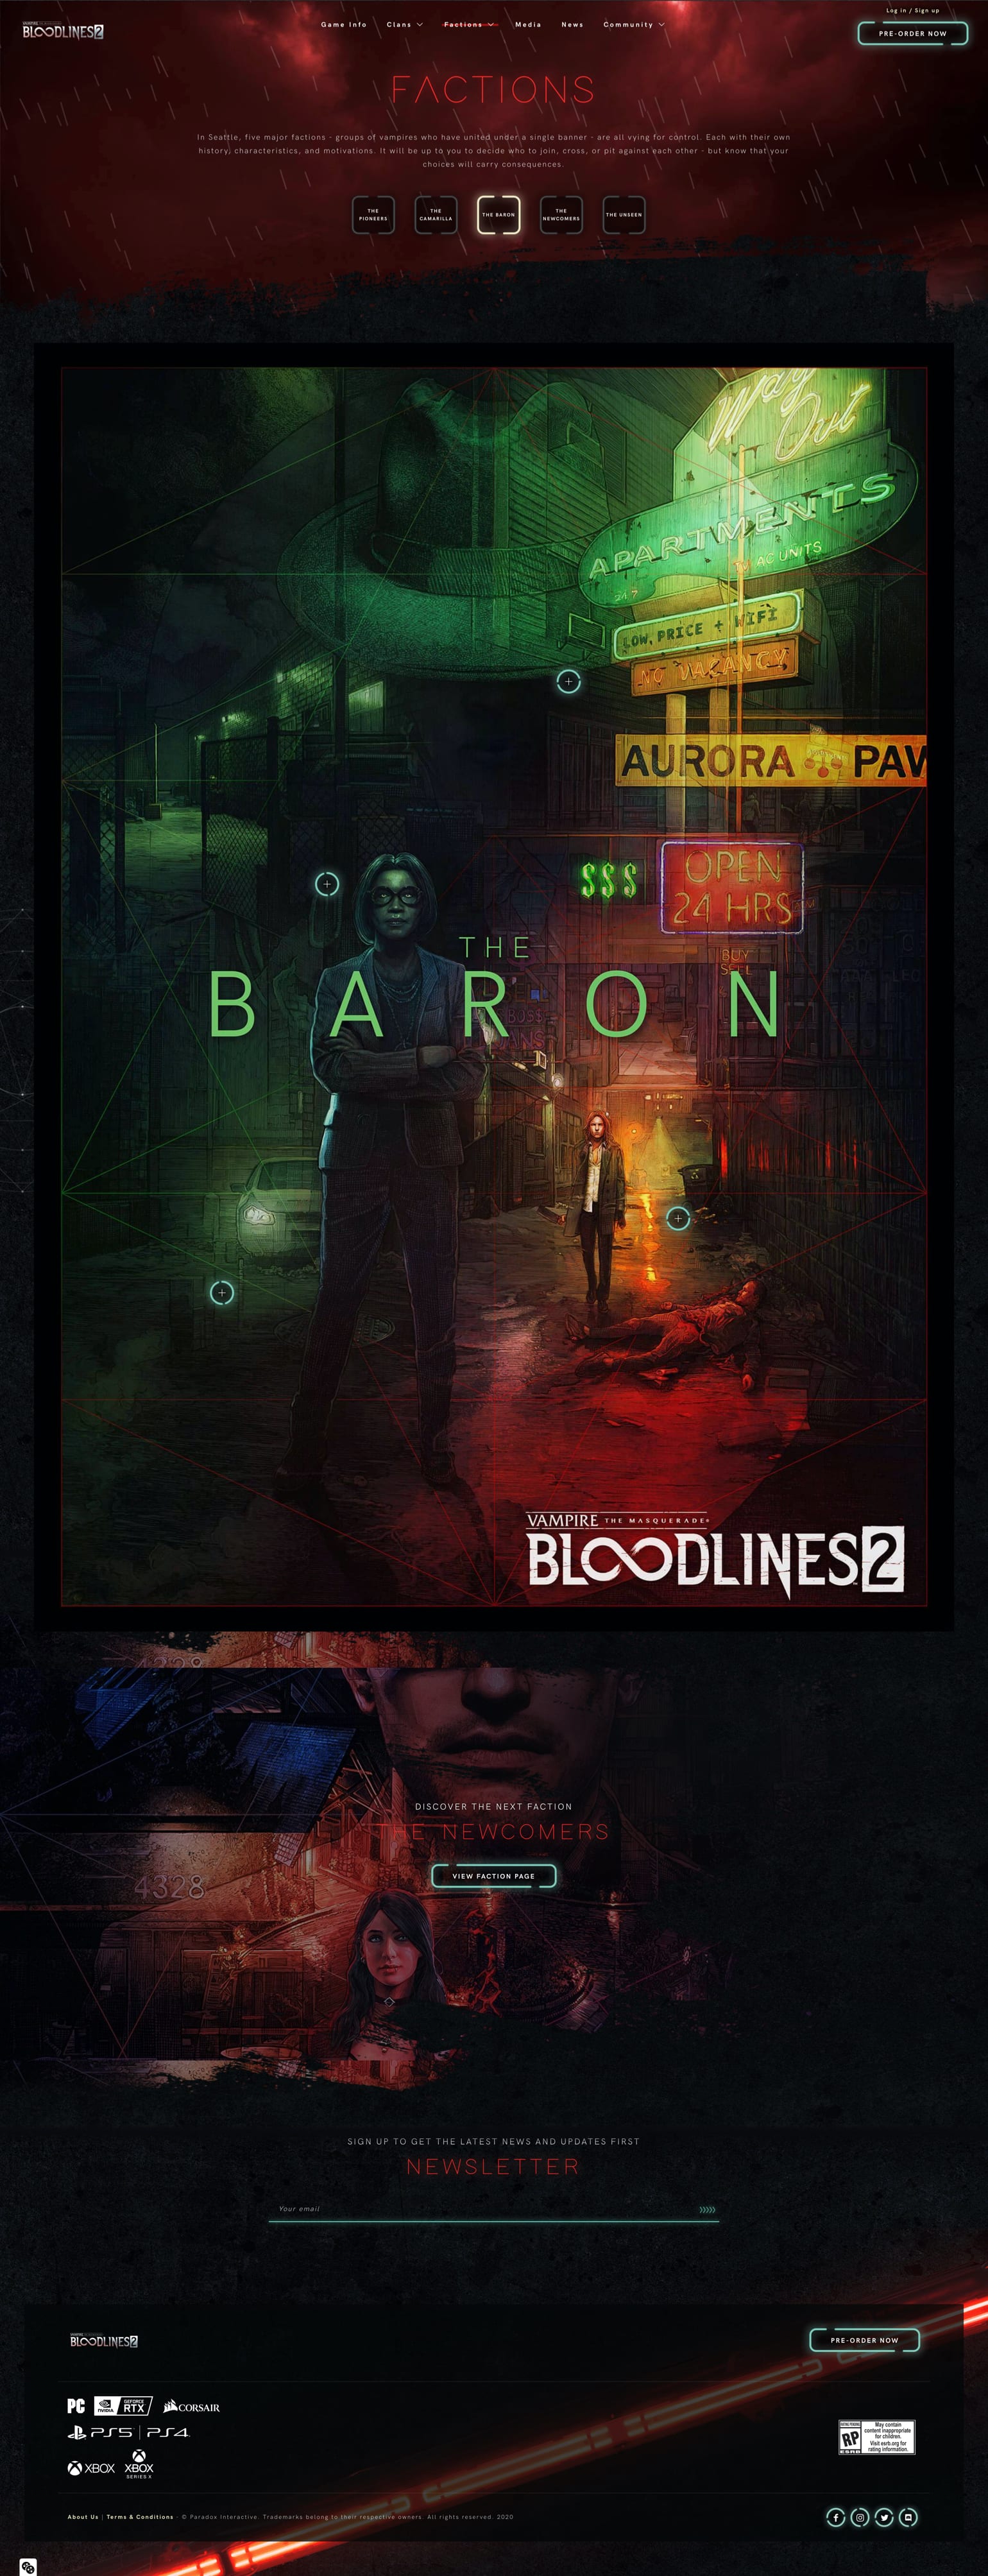 Interface du site 'Bloodlines 2'